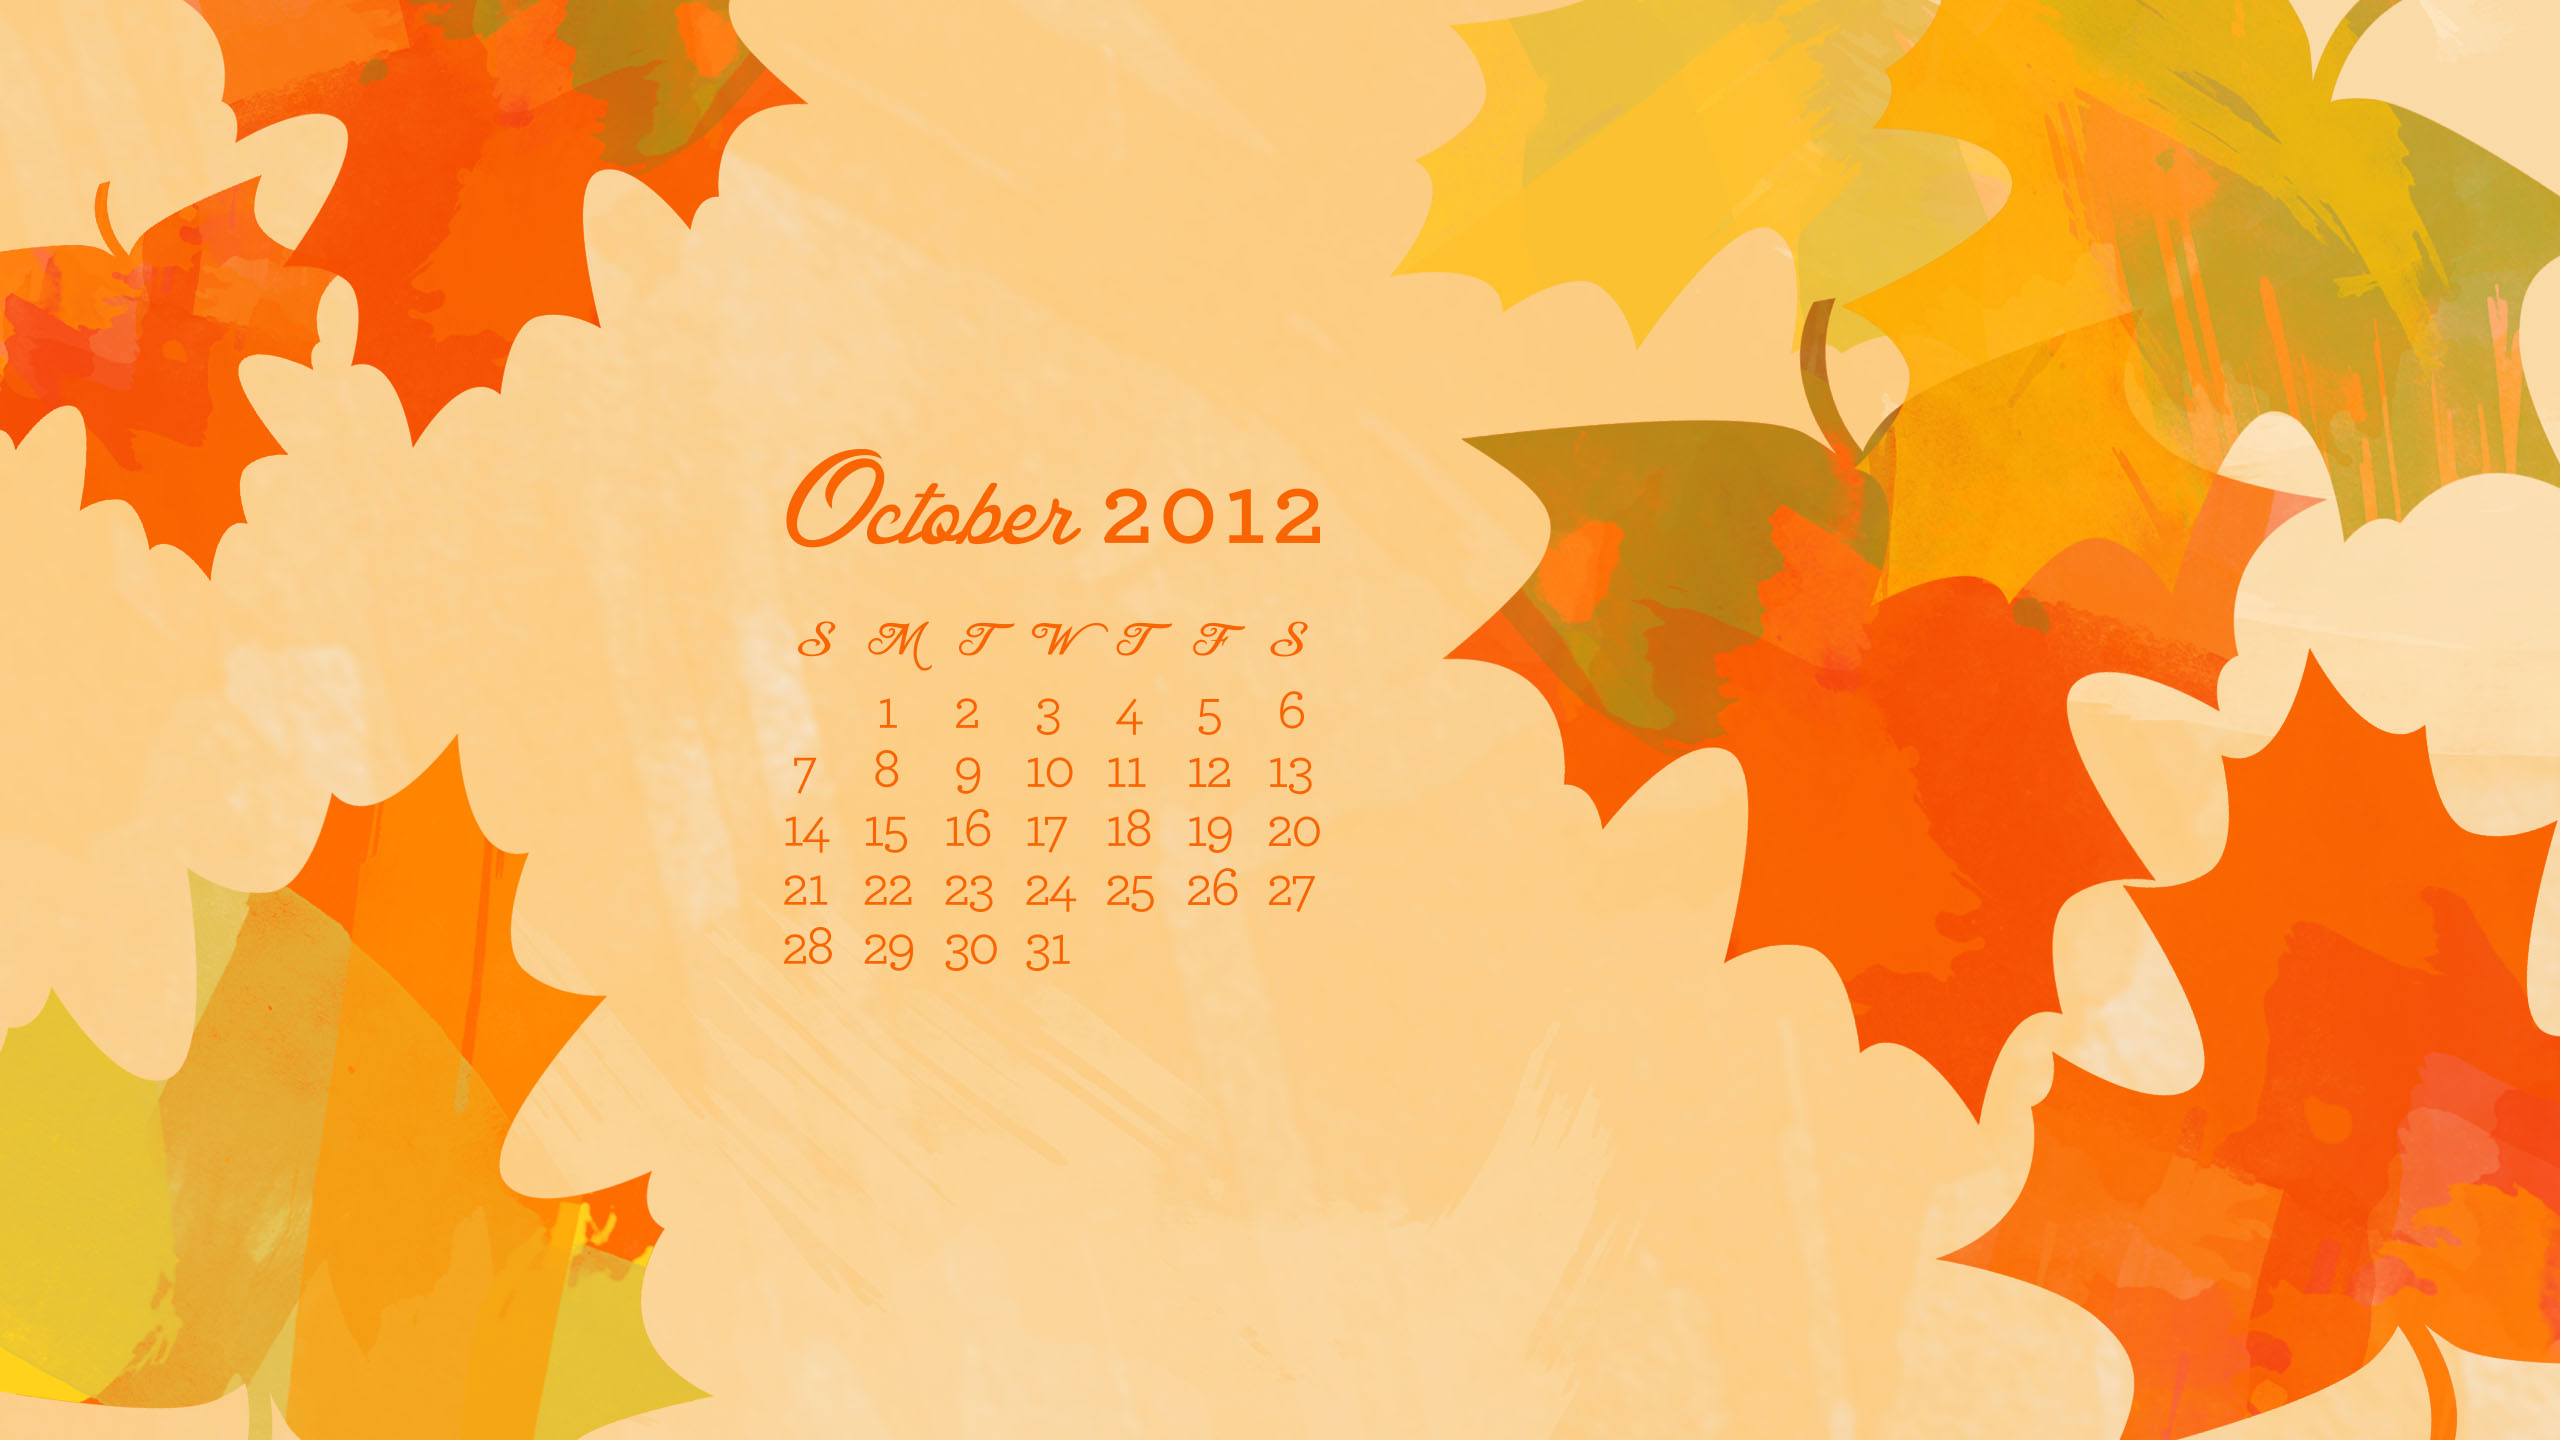 October 2012 Desktop, iPhone & iPad Calendar Wallpaper - Sarah Hearts